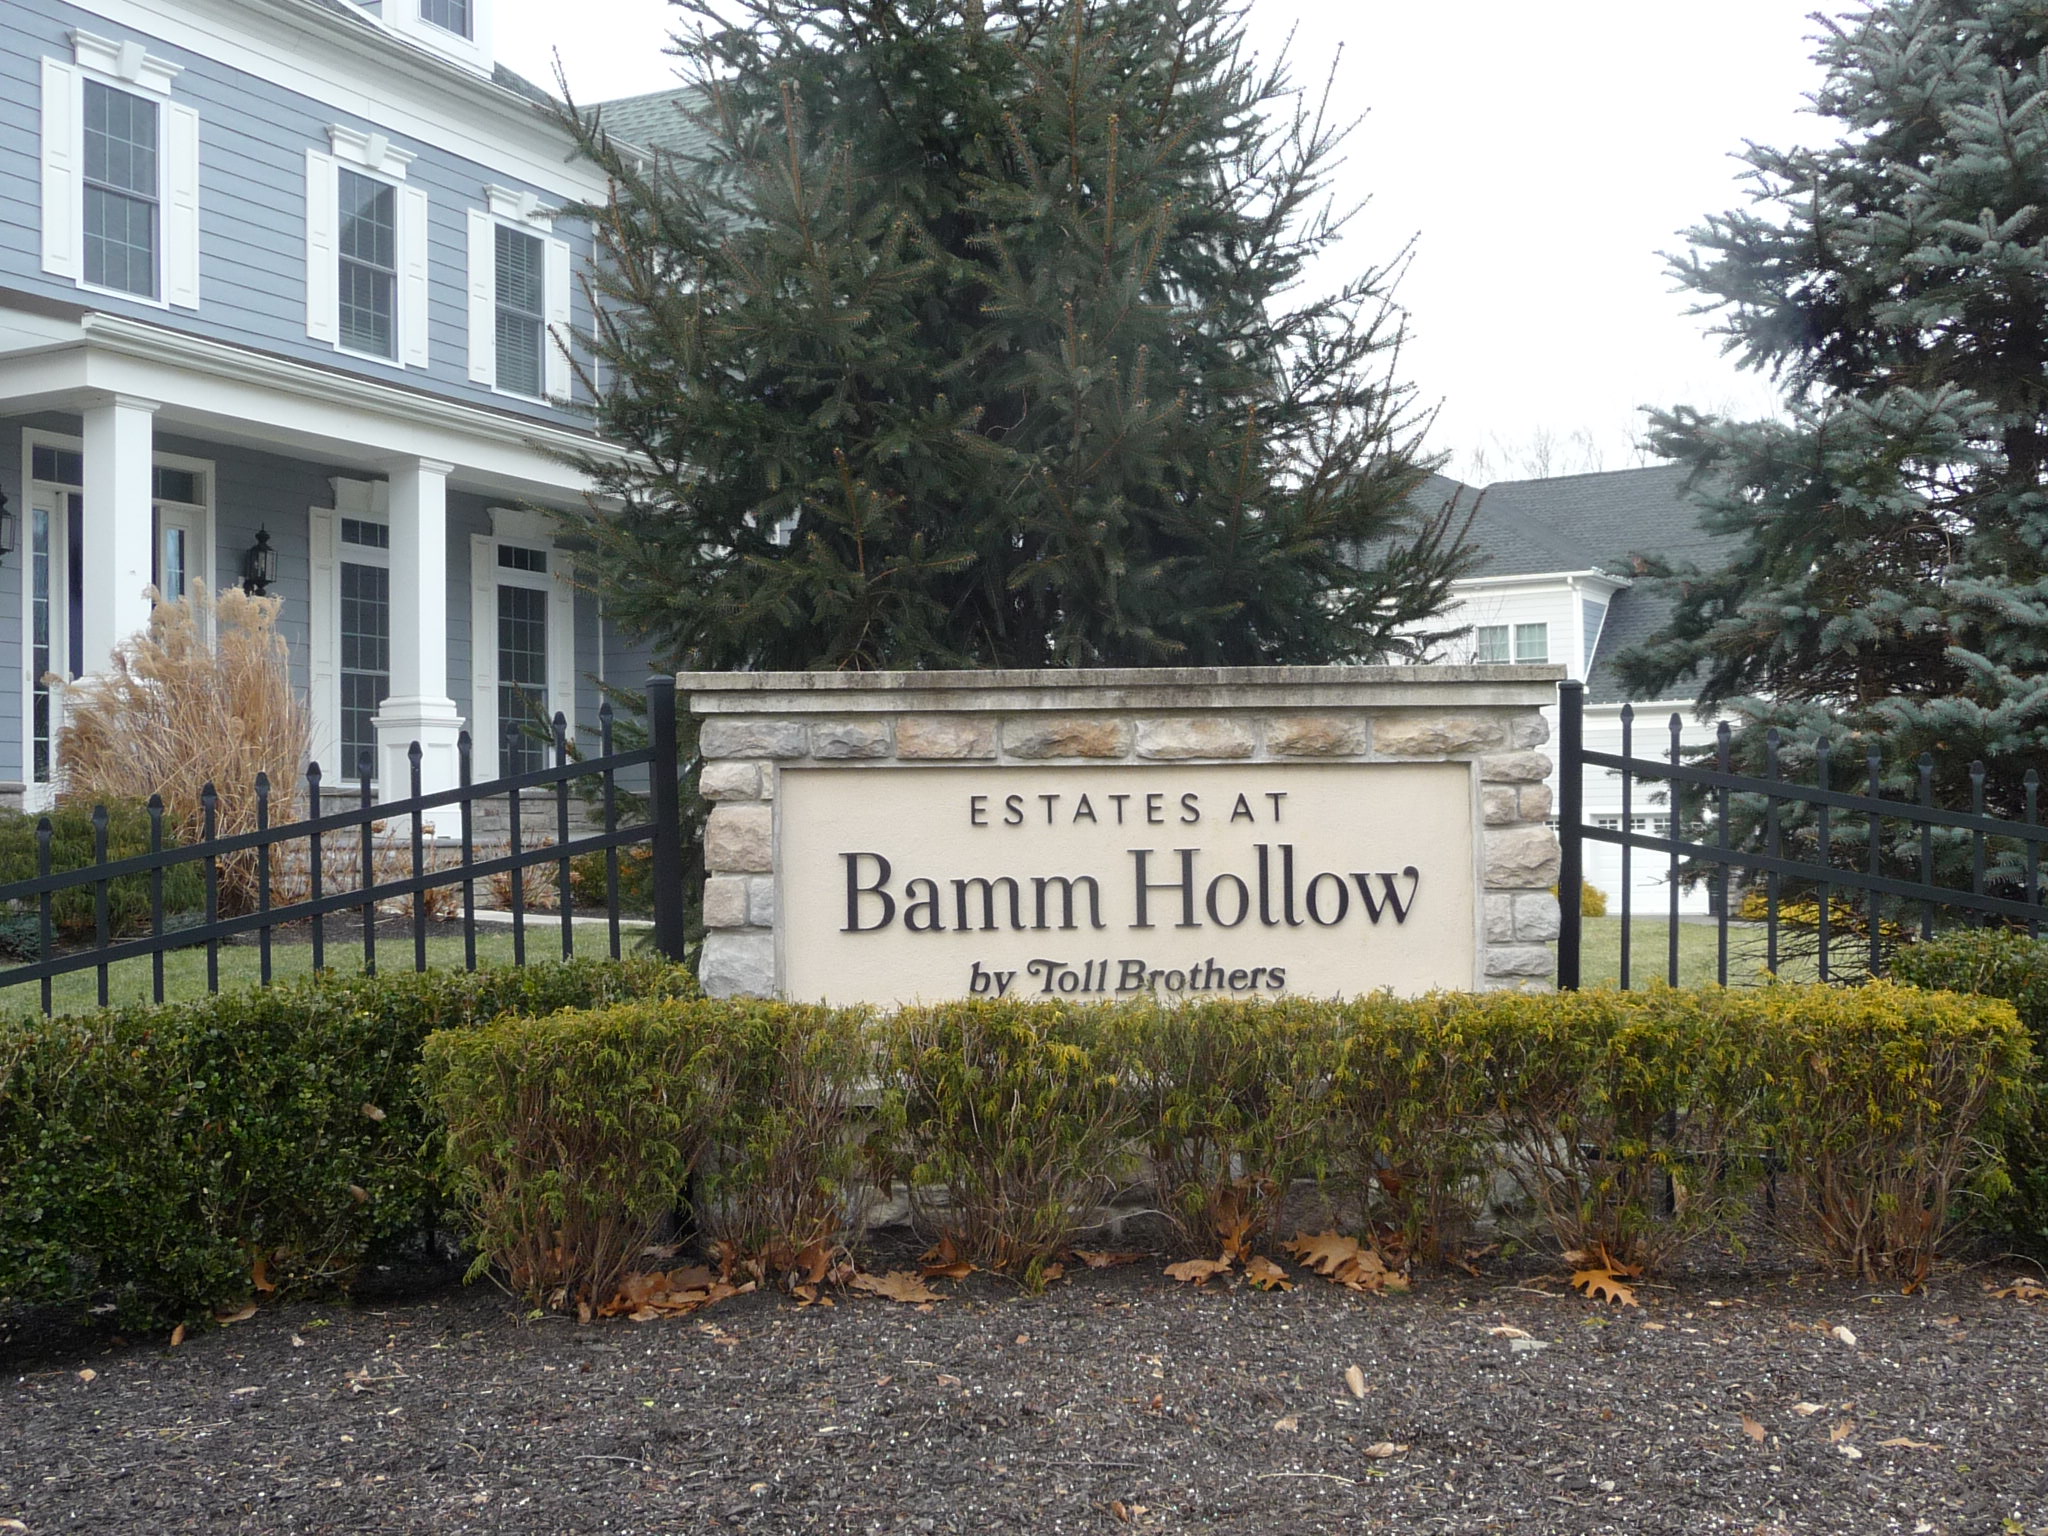 Entry sign at the Estates at Bamm Hollow